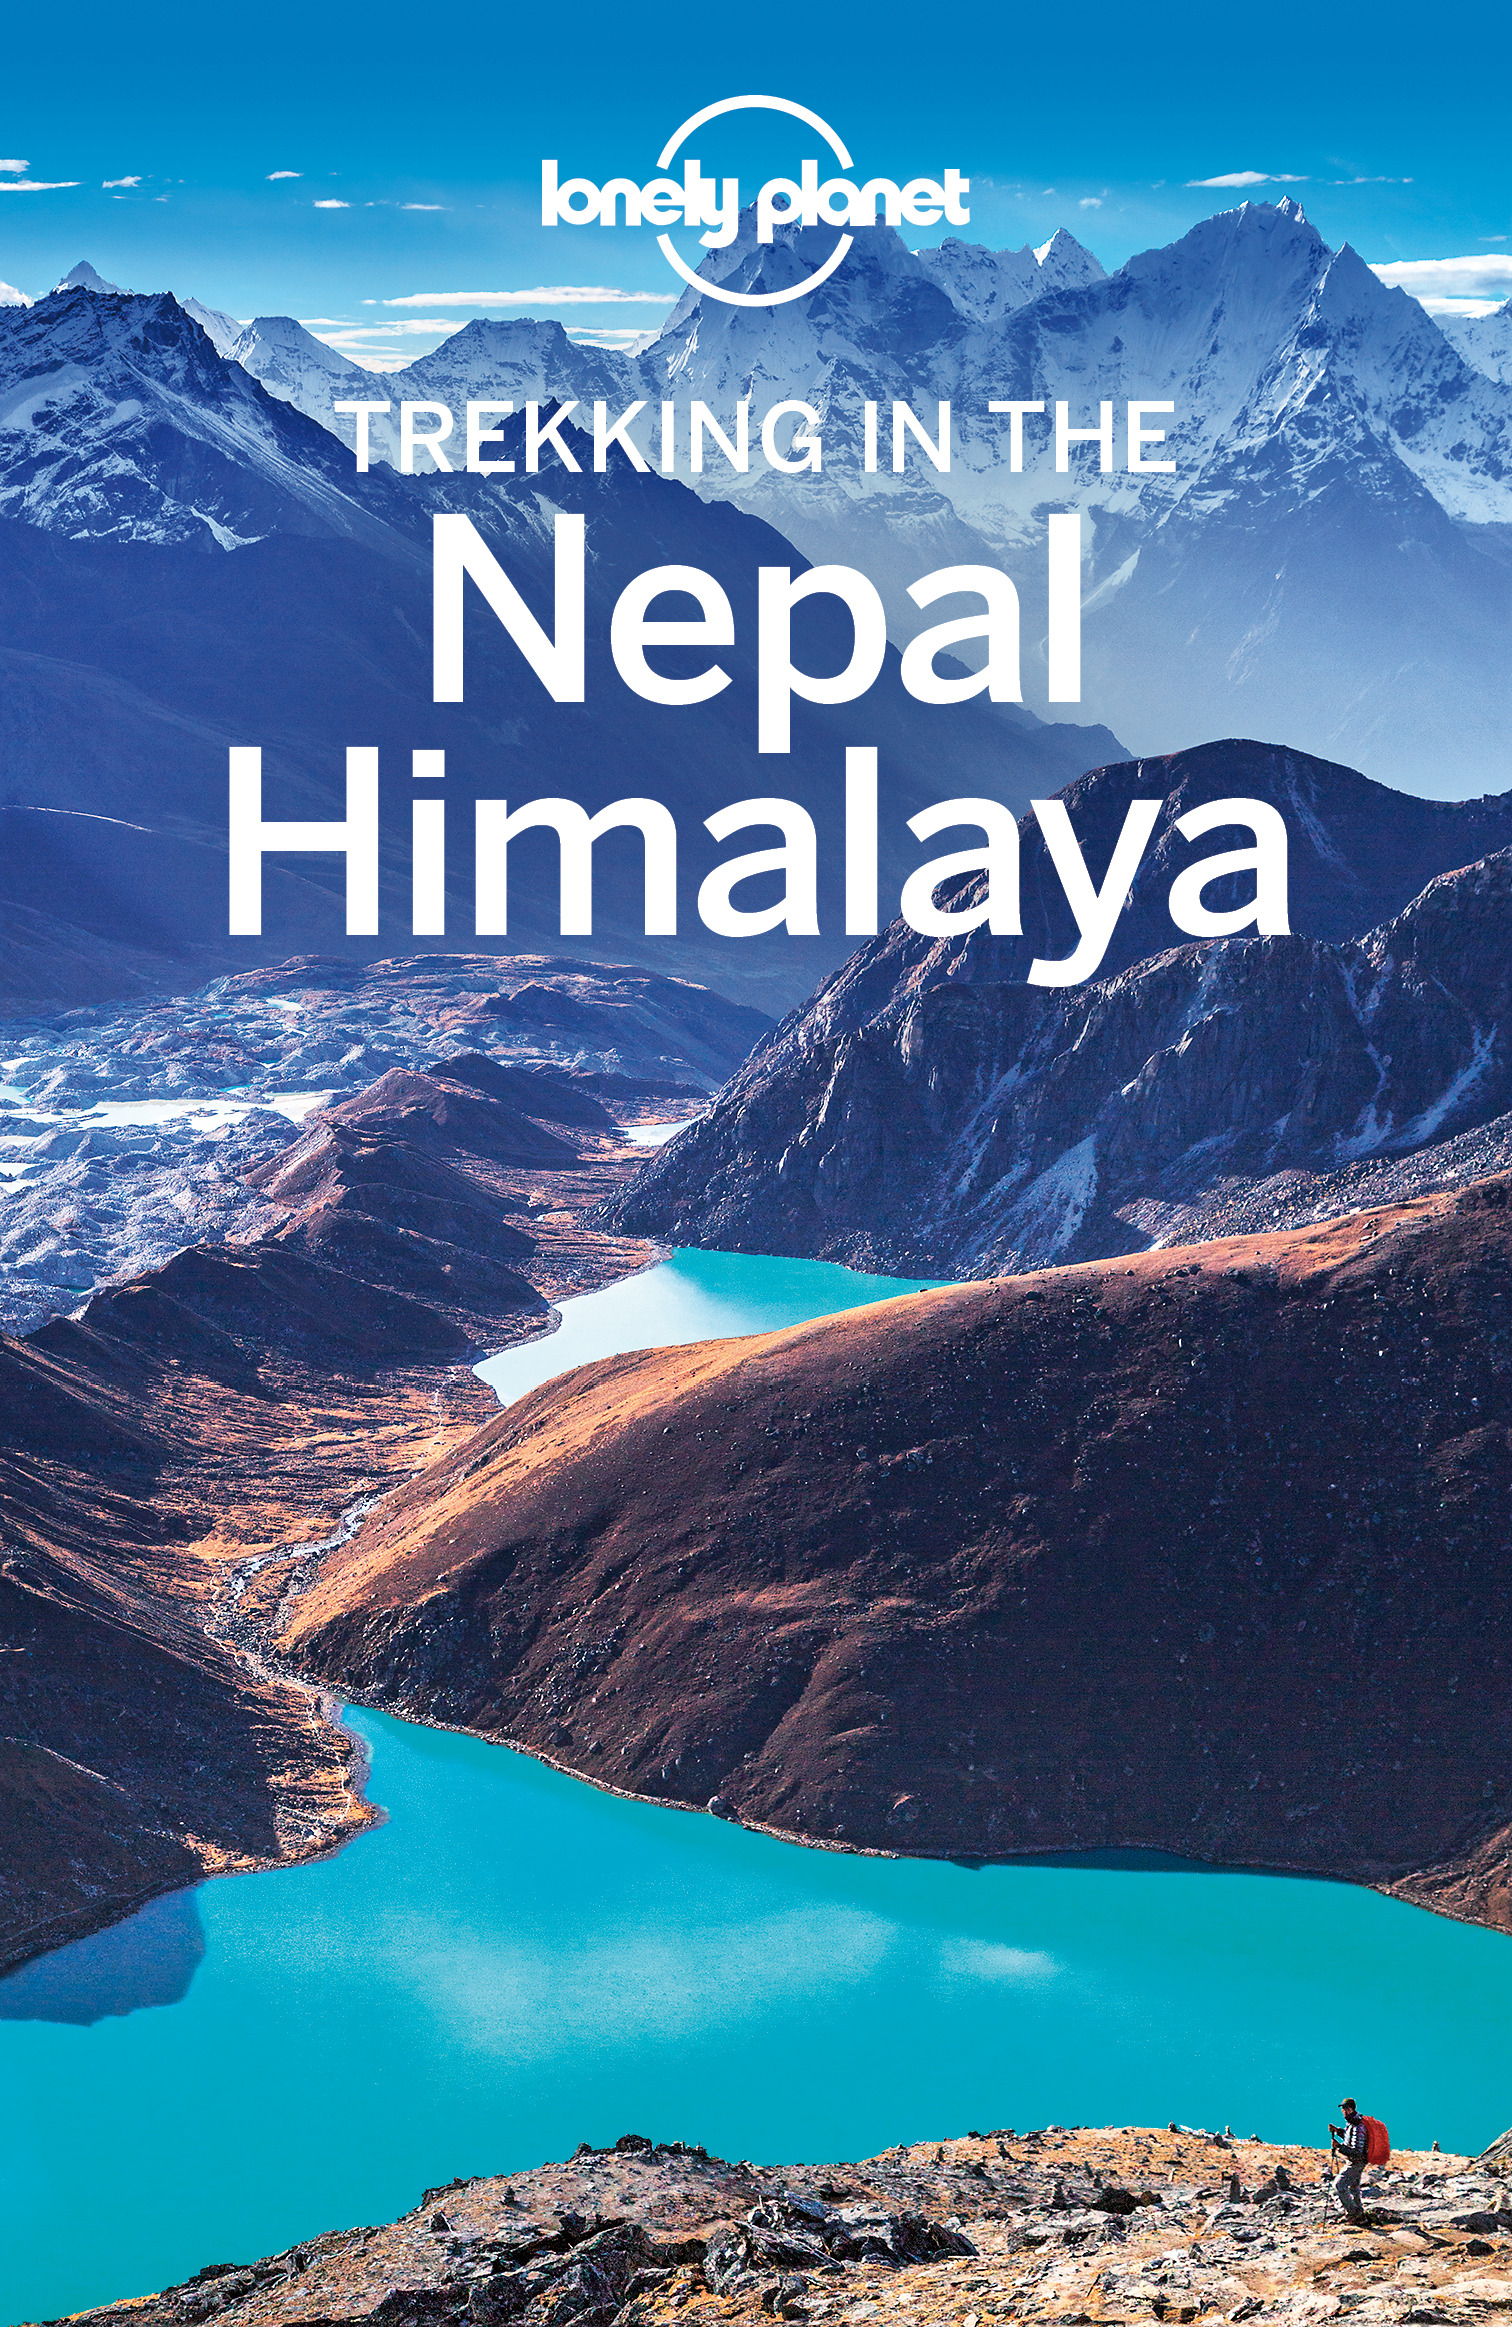 Brown, Lindsay - Lonely Planet Trekking in the Nepal Himalaya, ebook